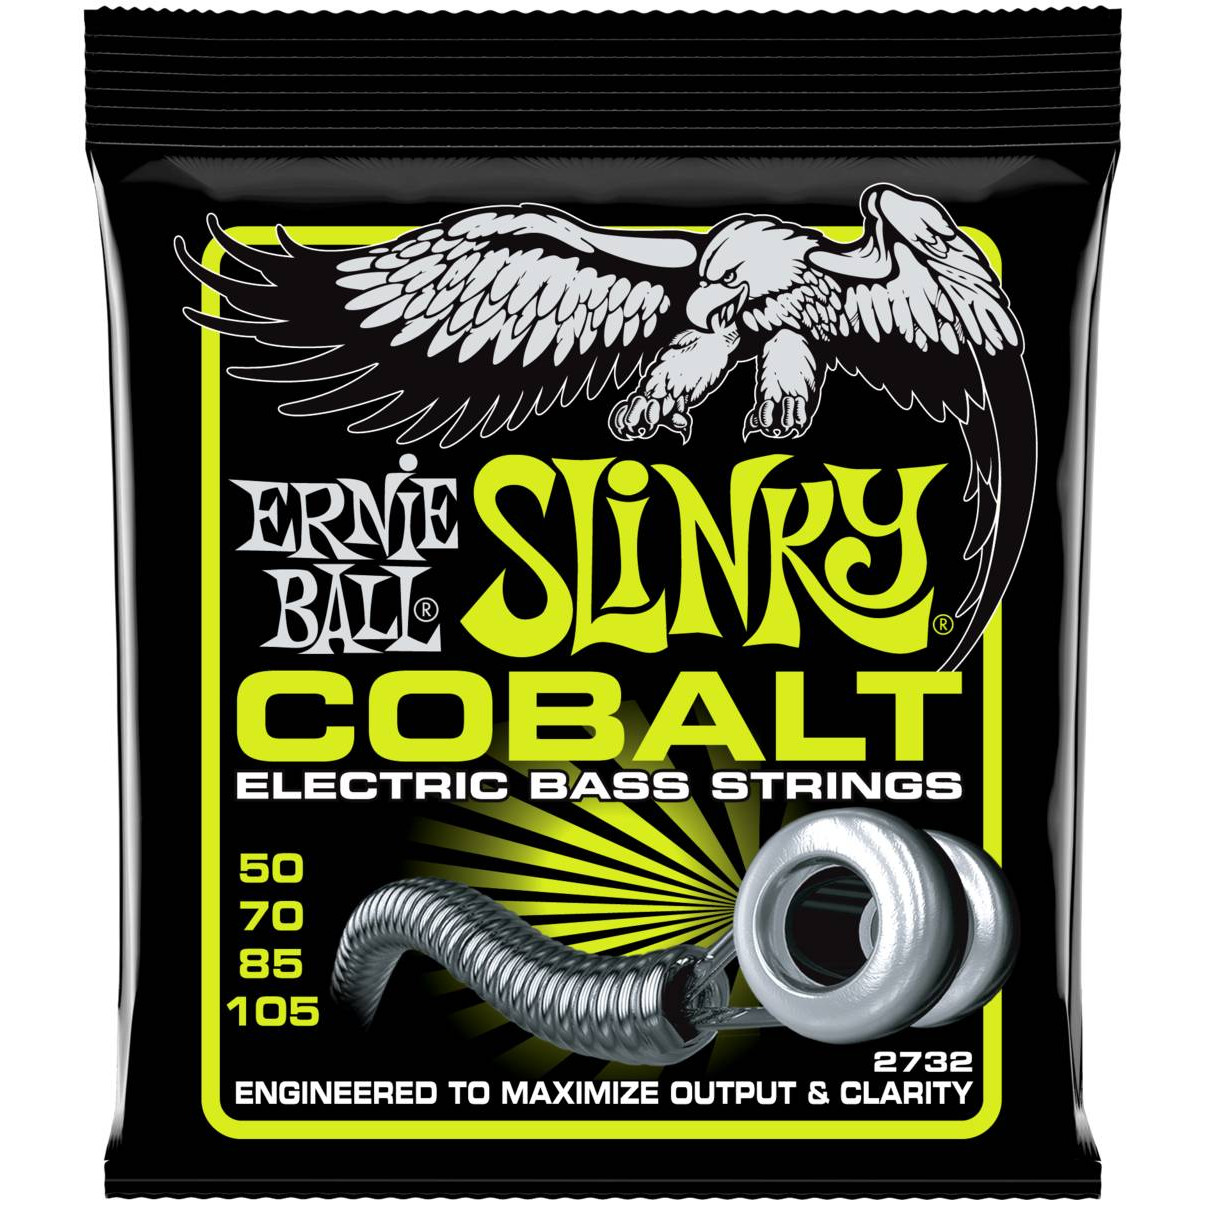 Струны Ernie Ball 2732 Slinky Cobalt Regular струны ernie ball 2734 slinky cobalt super bass